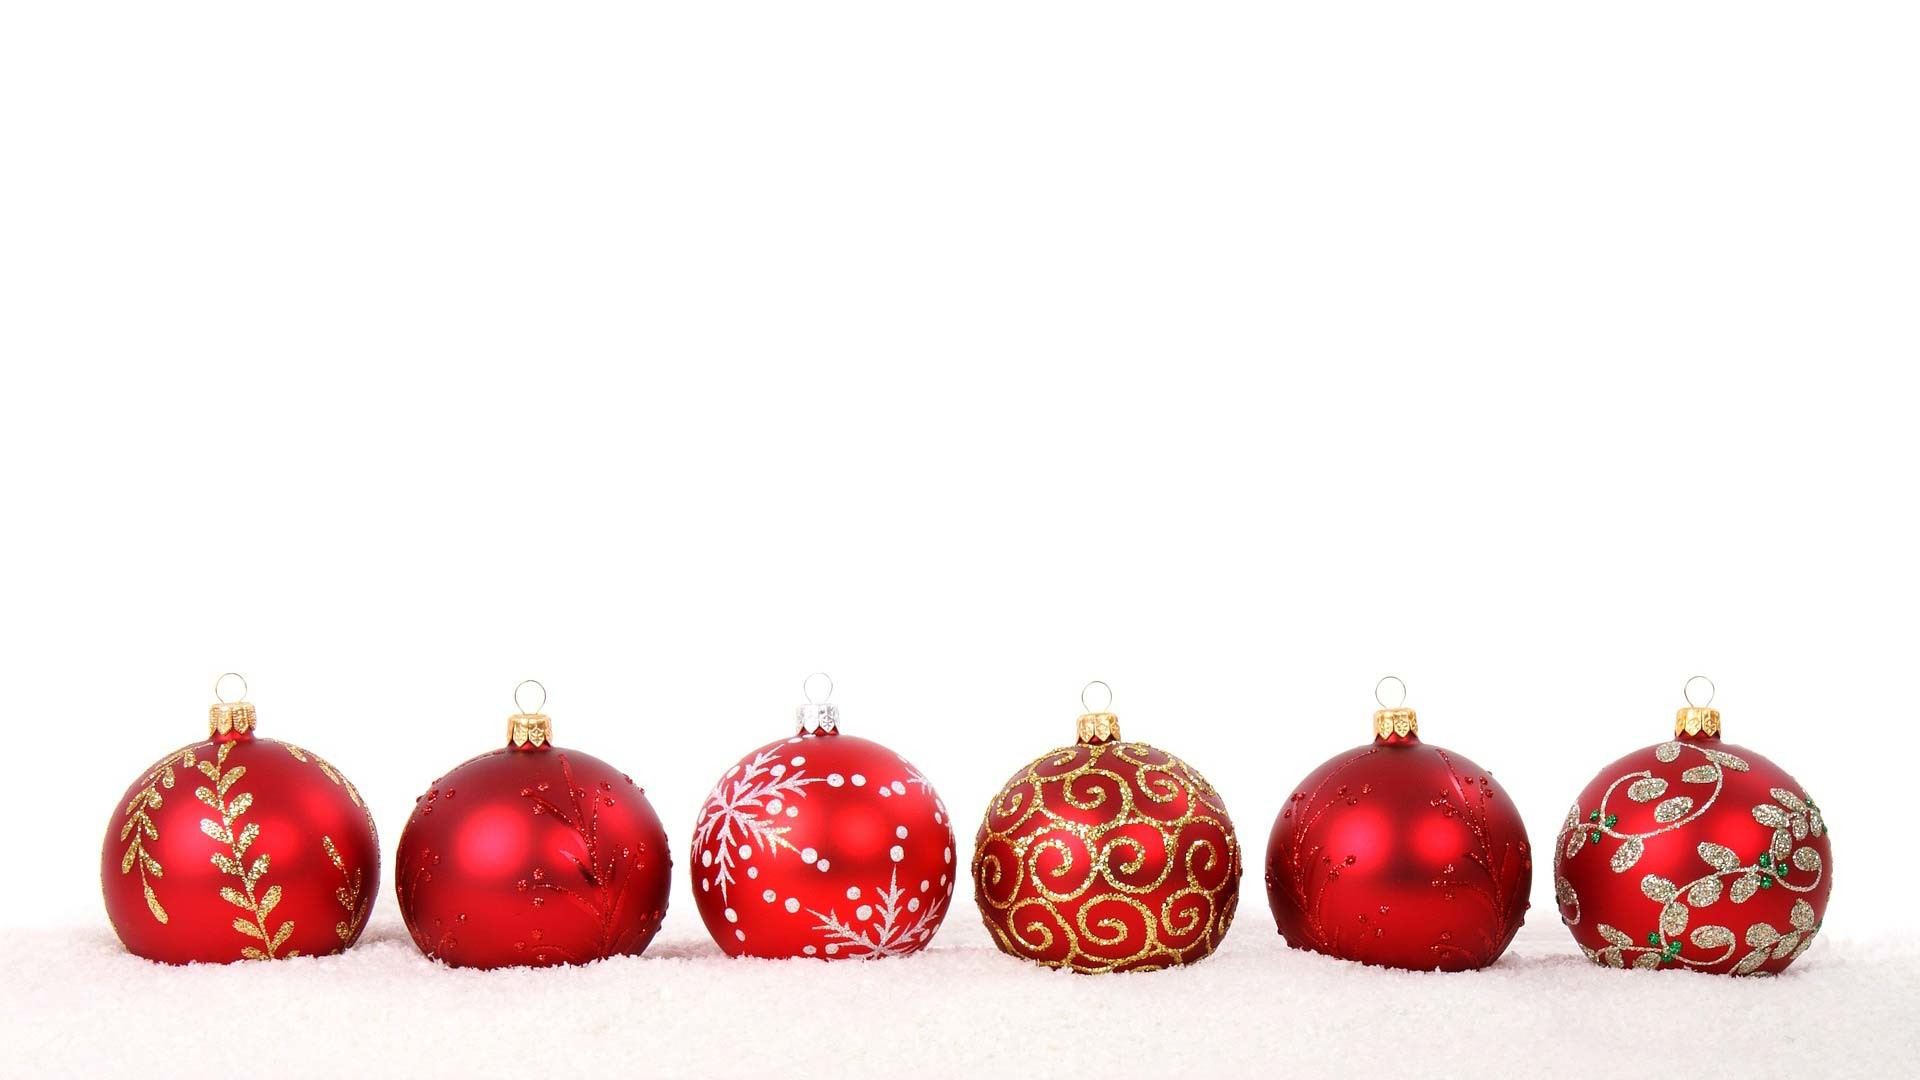 1920x1080 Christmas and Holiday Images - Christmas-Ornaments